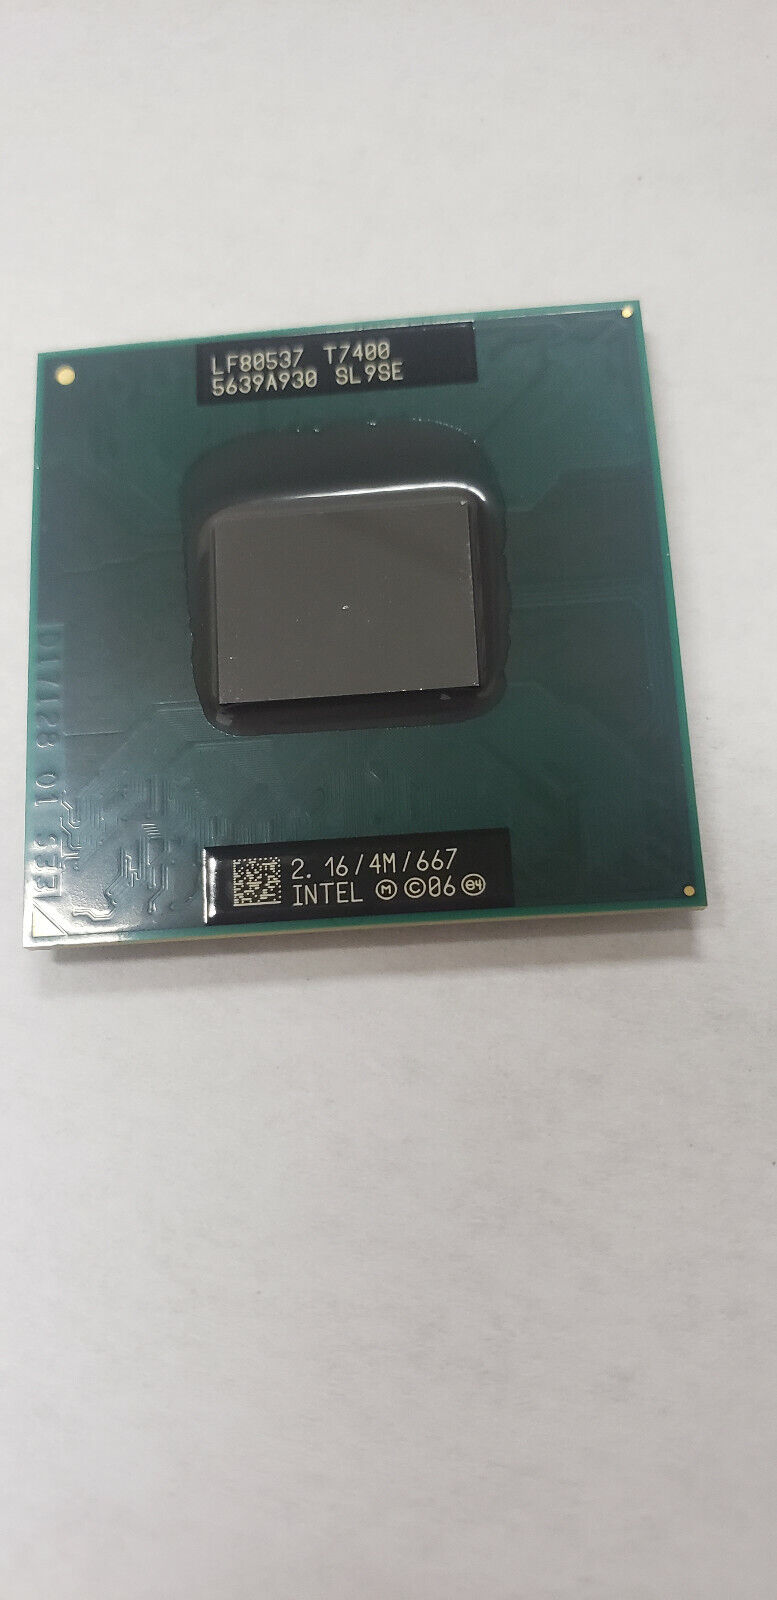 SL9SE Intel Core 2 Duo T7400 2.16GHz 4MB 667MHz Processor CPU